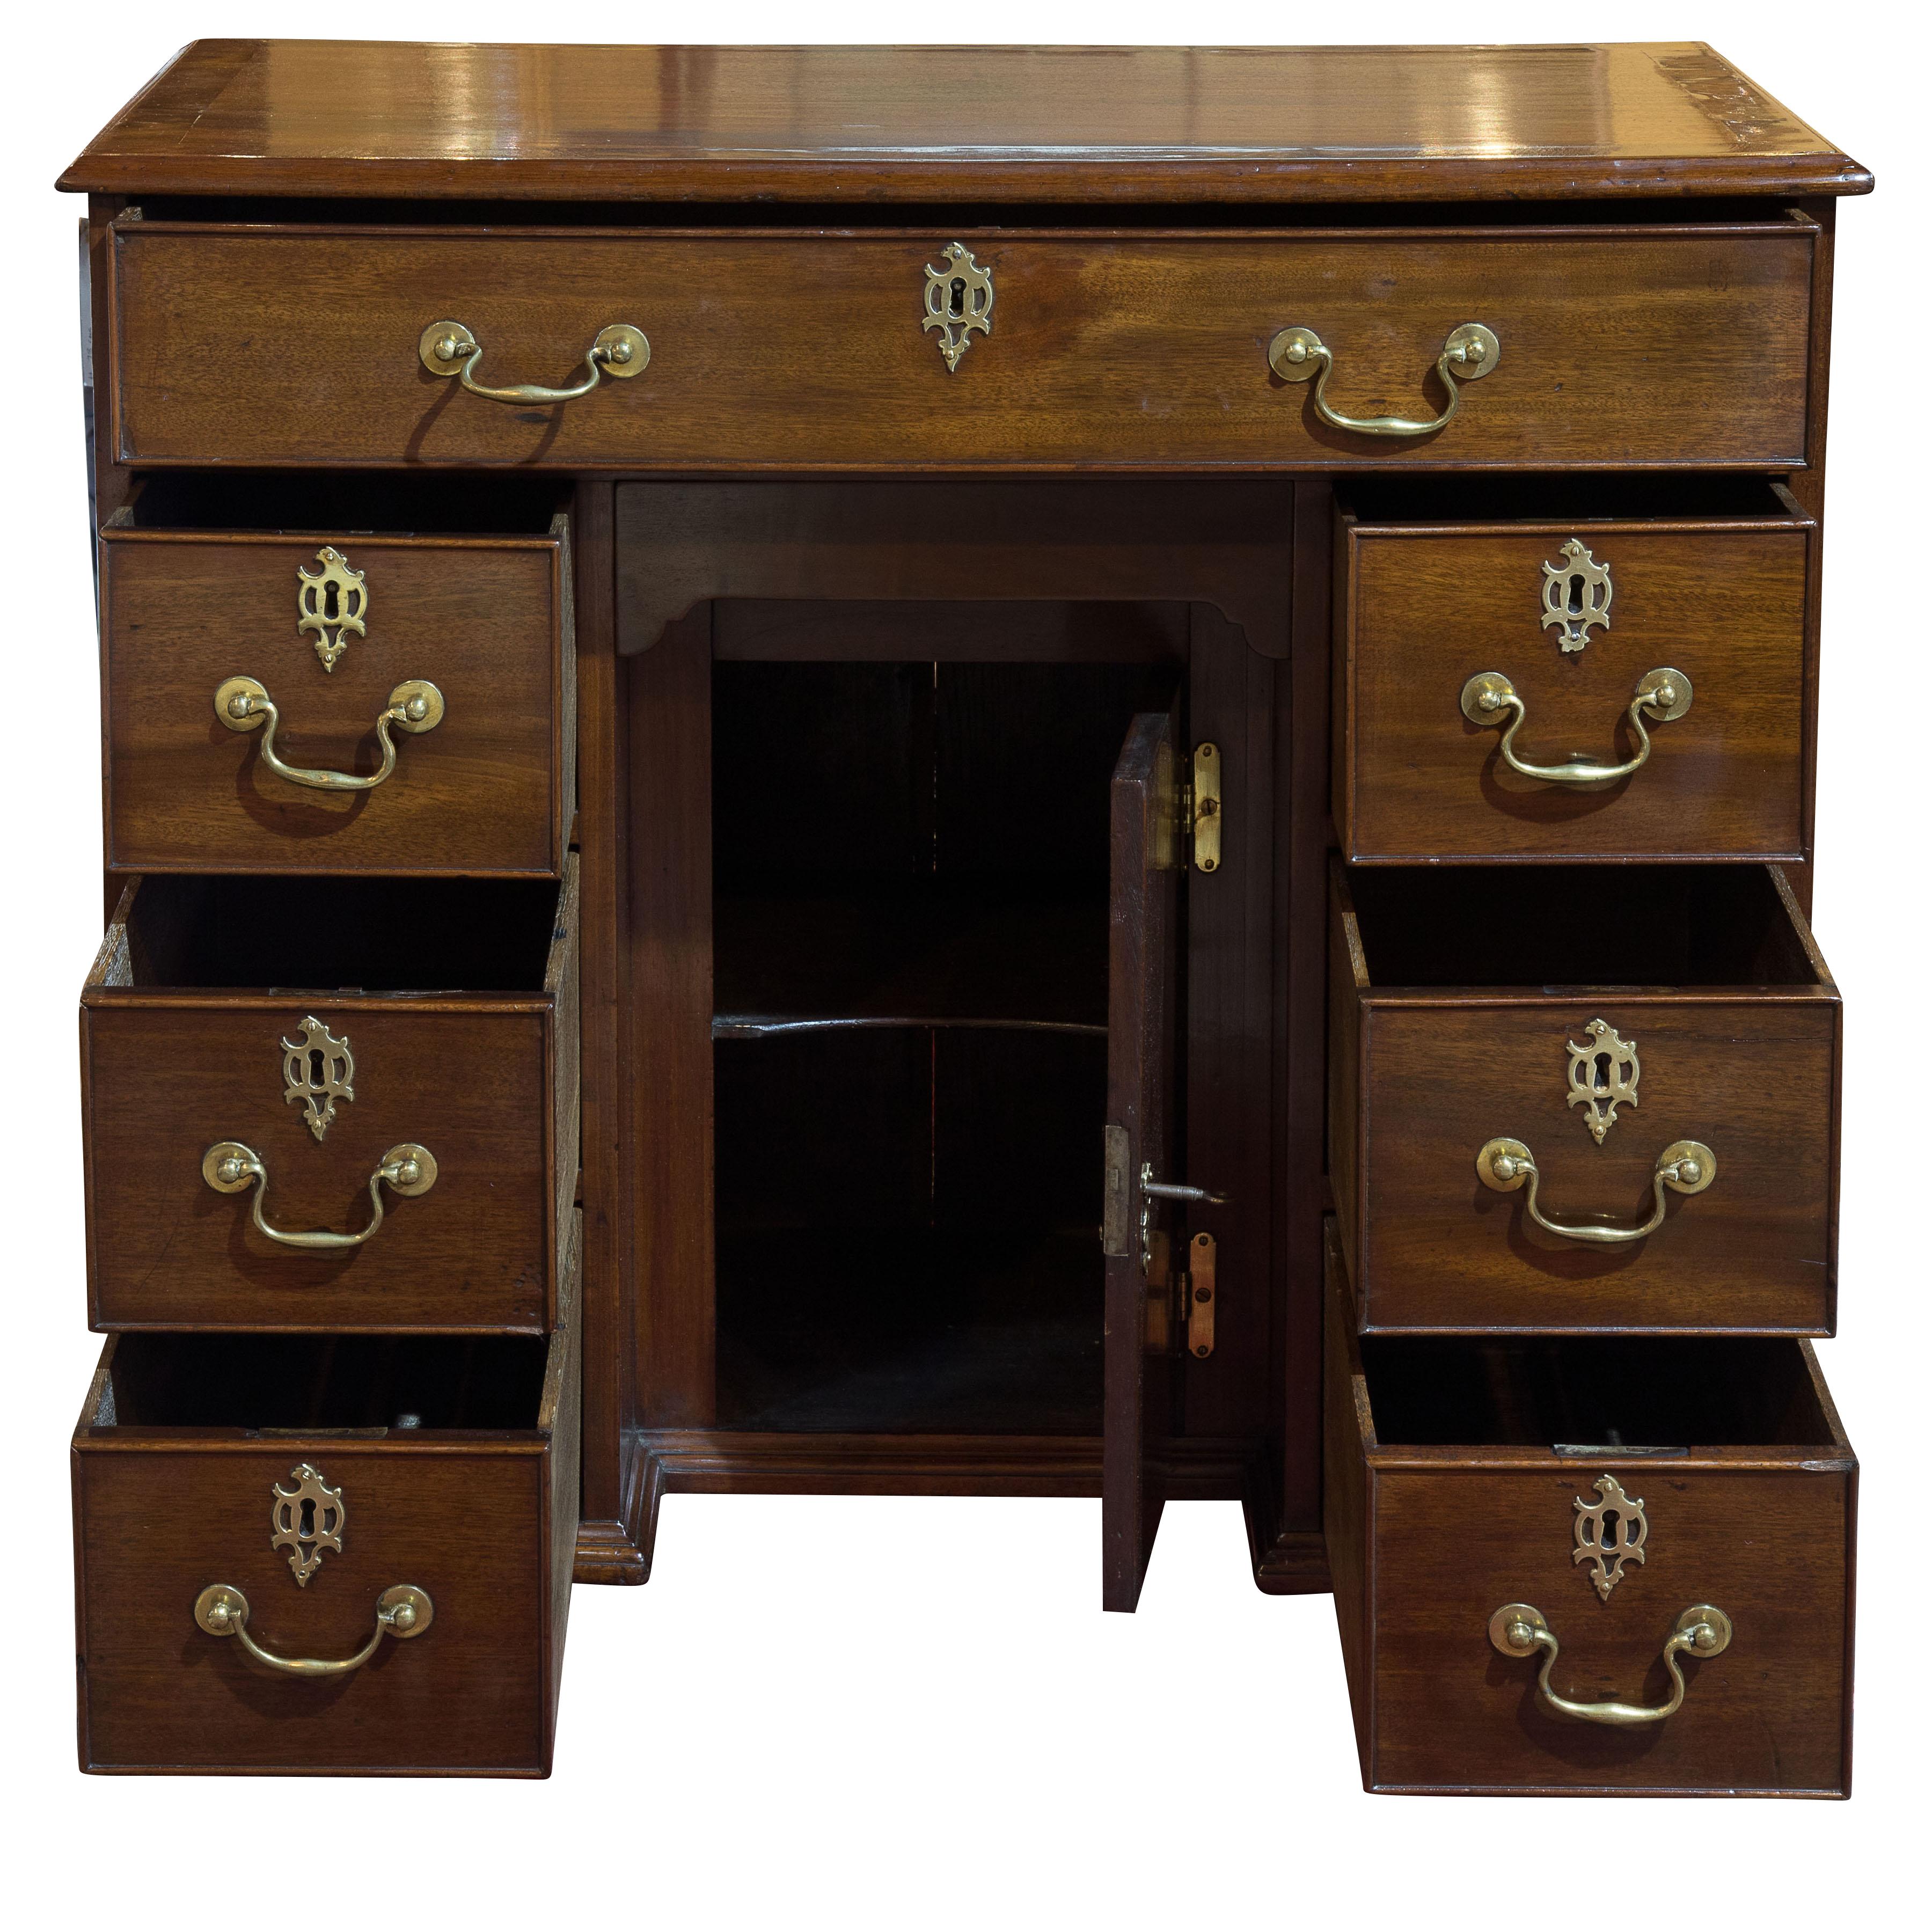 Striking George III mahogany kneehole desk with original hardware.